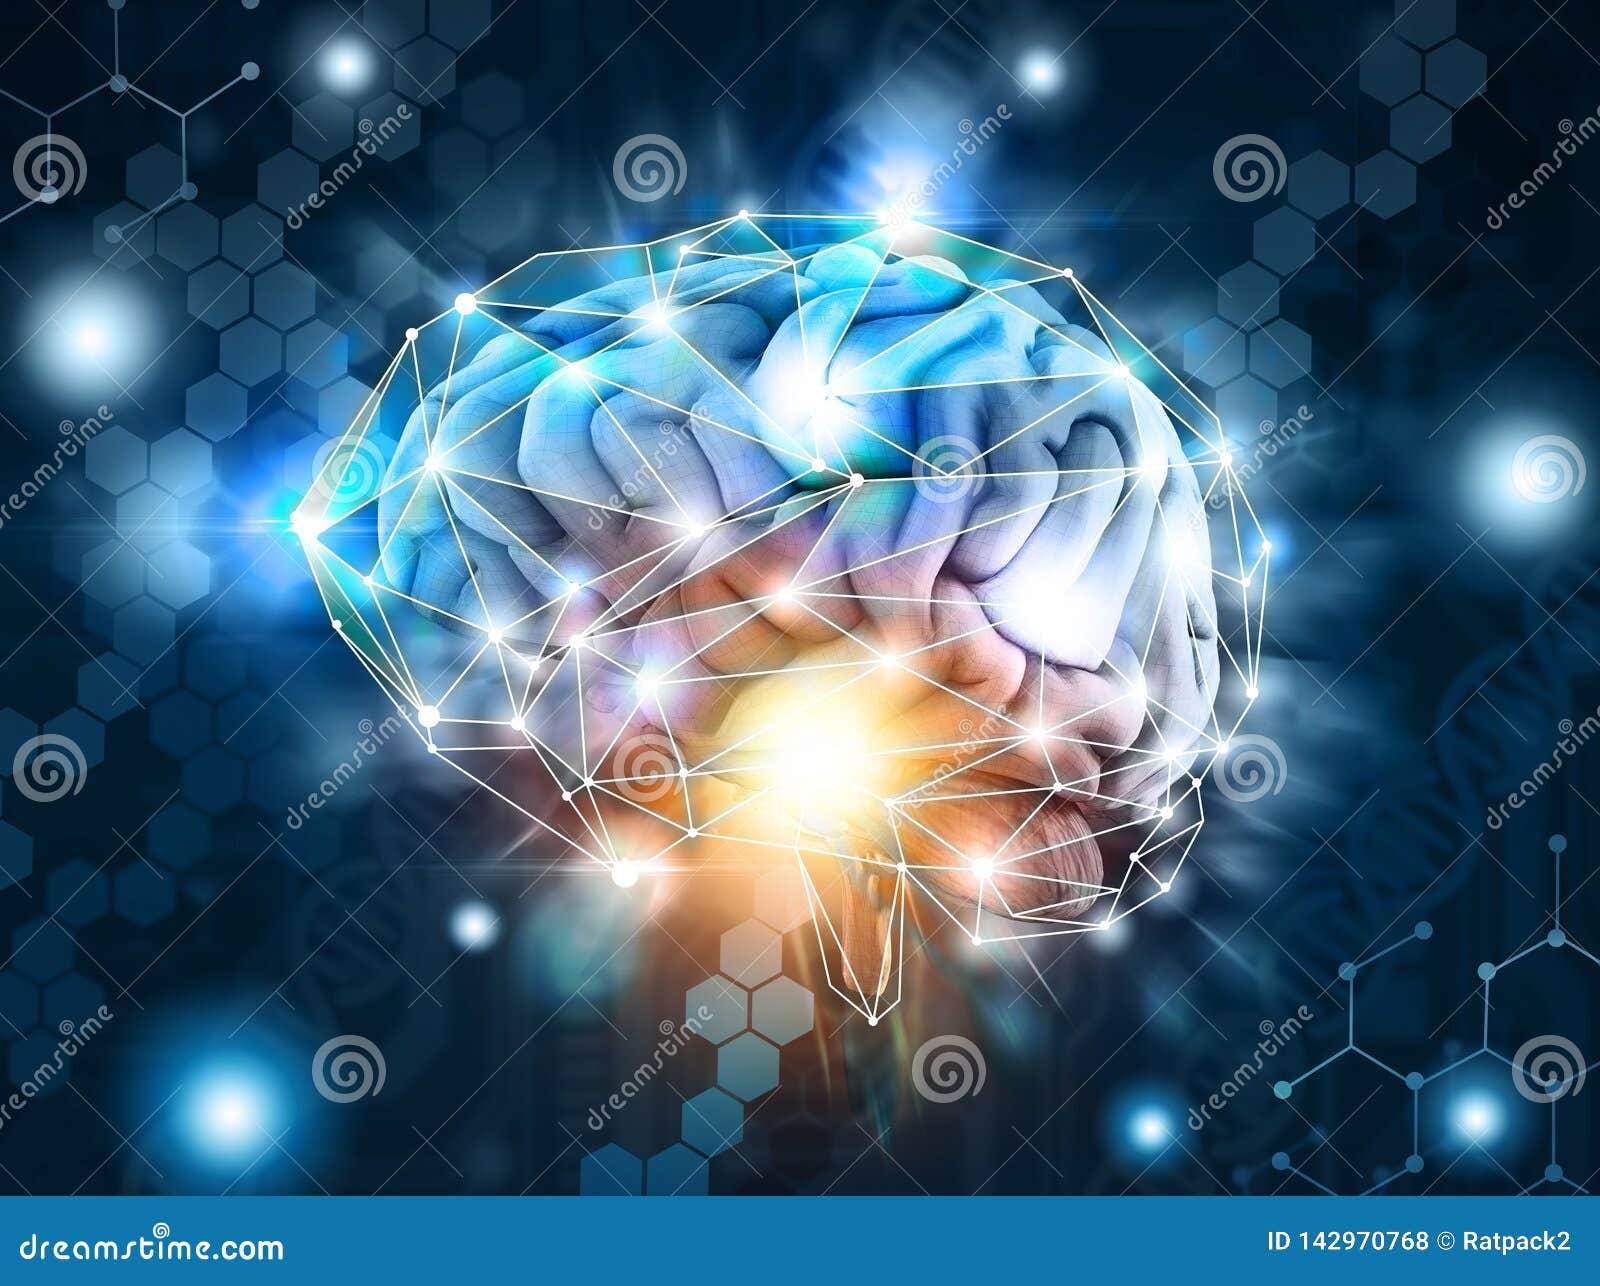 artificial intelligence,  processing neurological data, brain, cloud